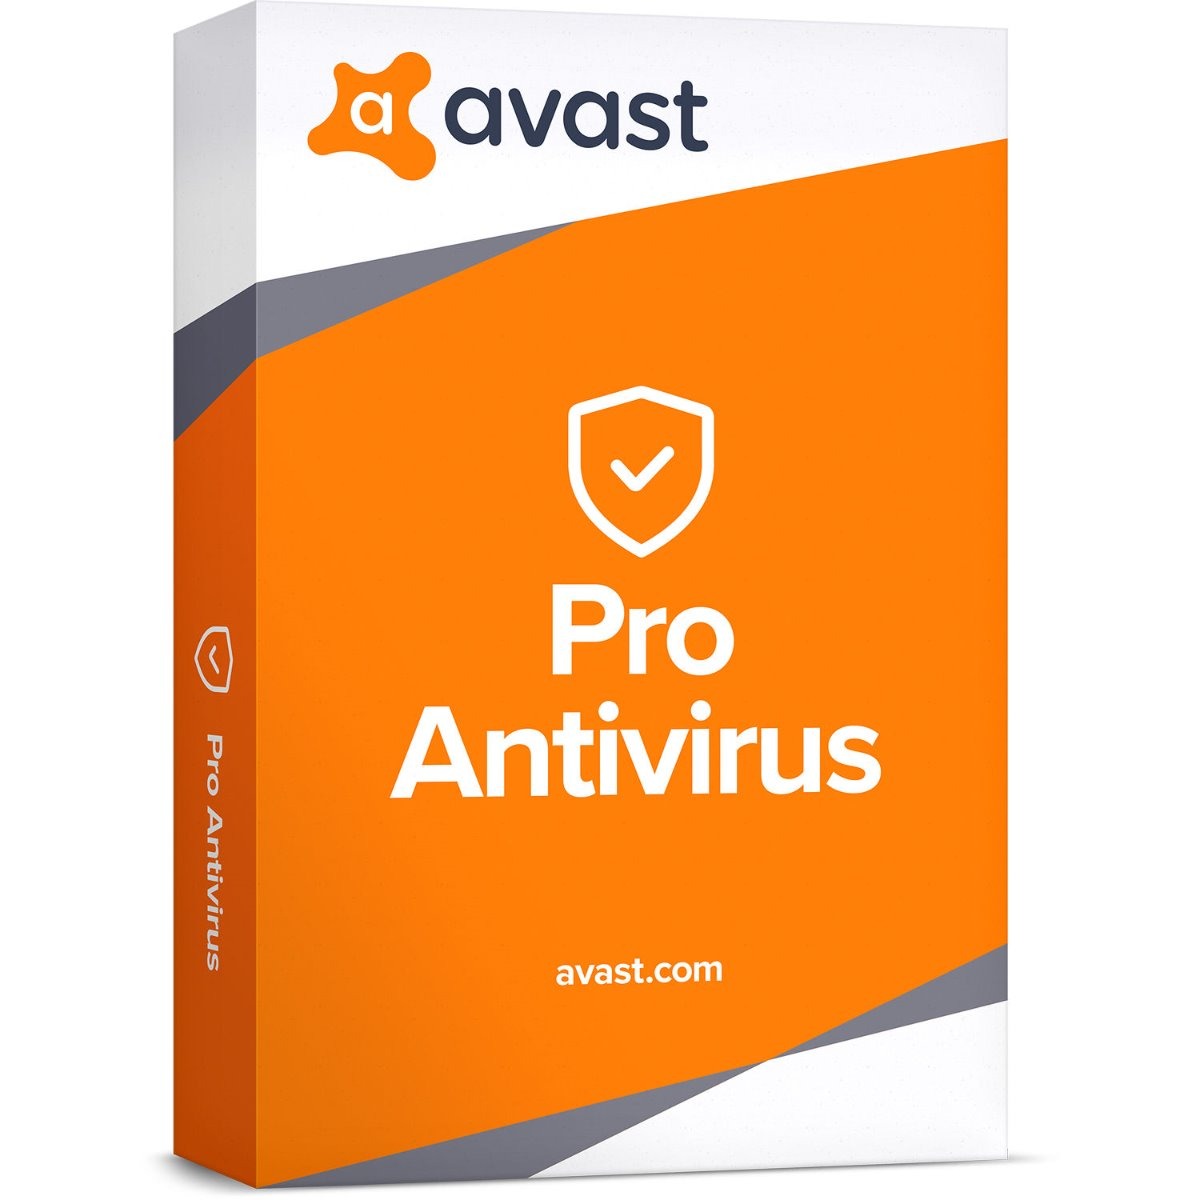 antivirus software download for java mobile